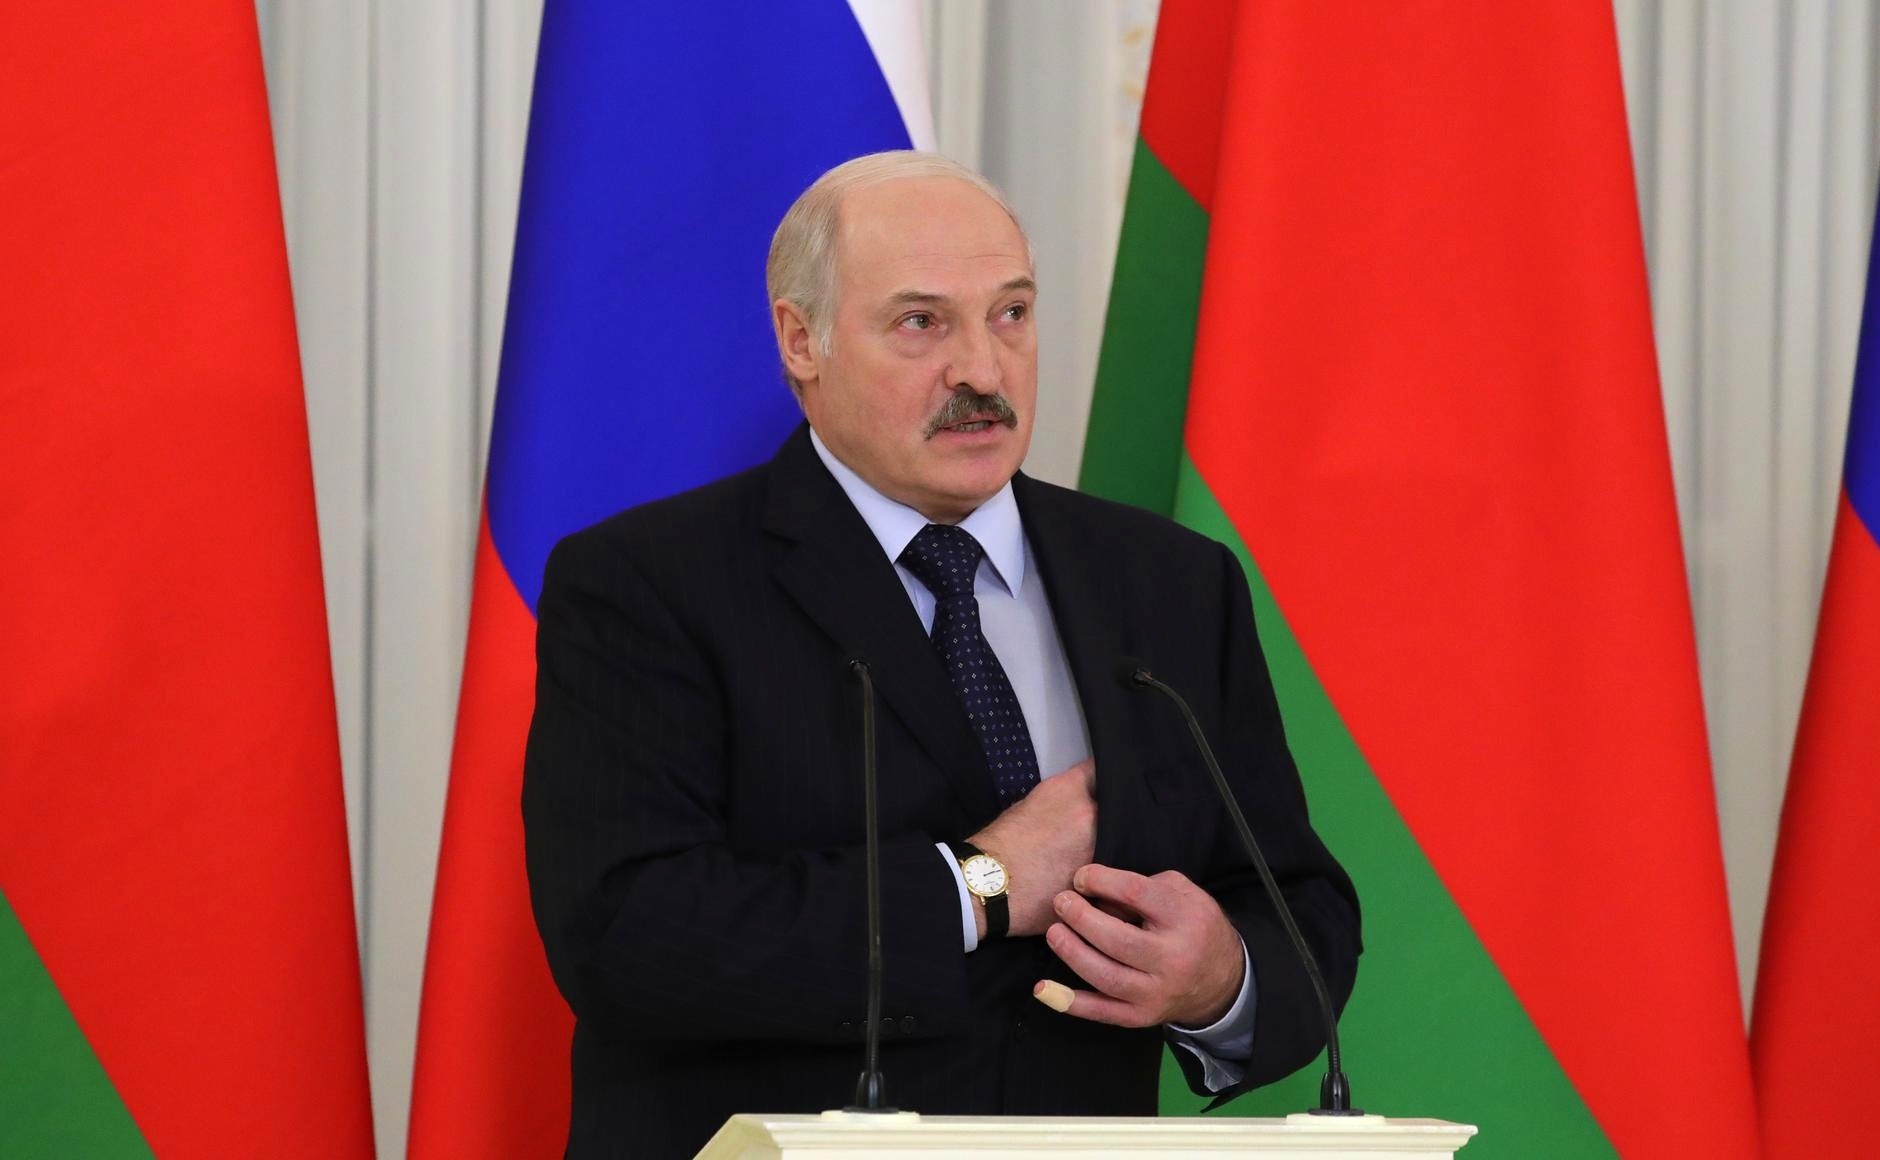 European Union Extends Arms Embargo Against Belarus